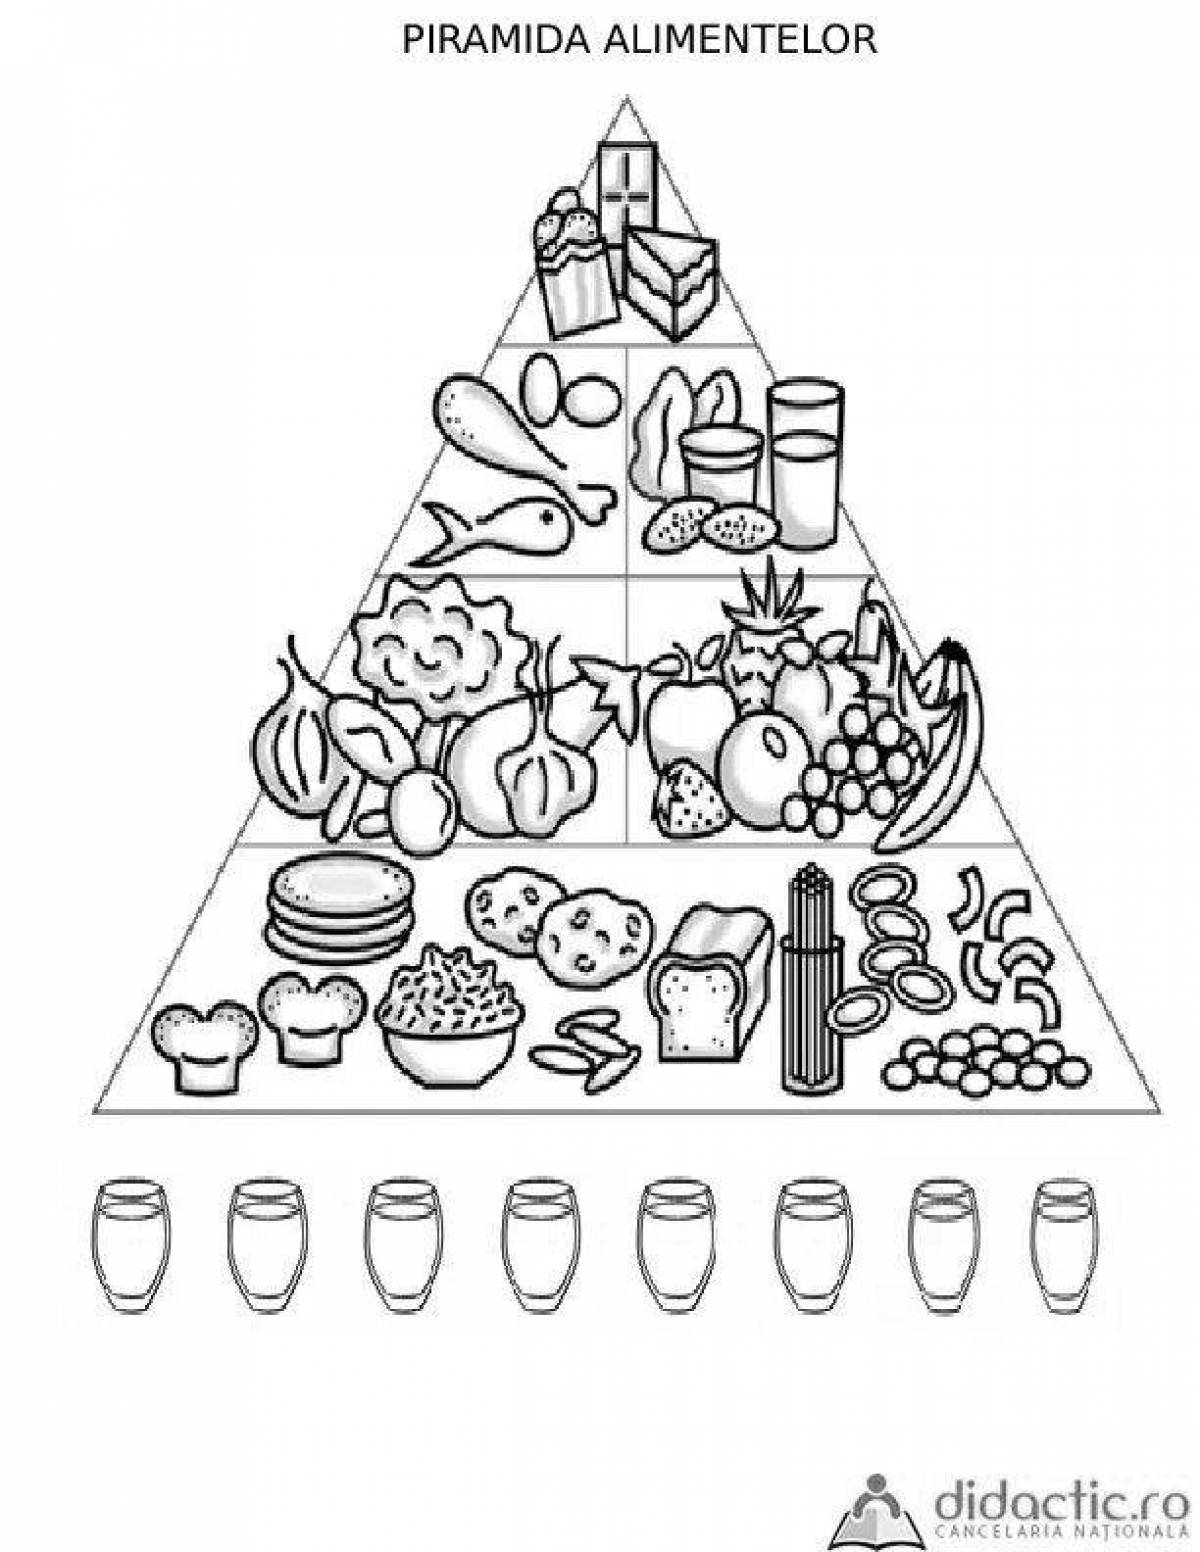 Food pyramid #2